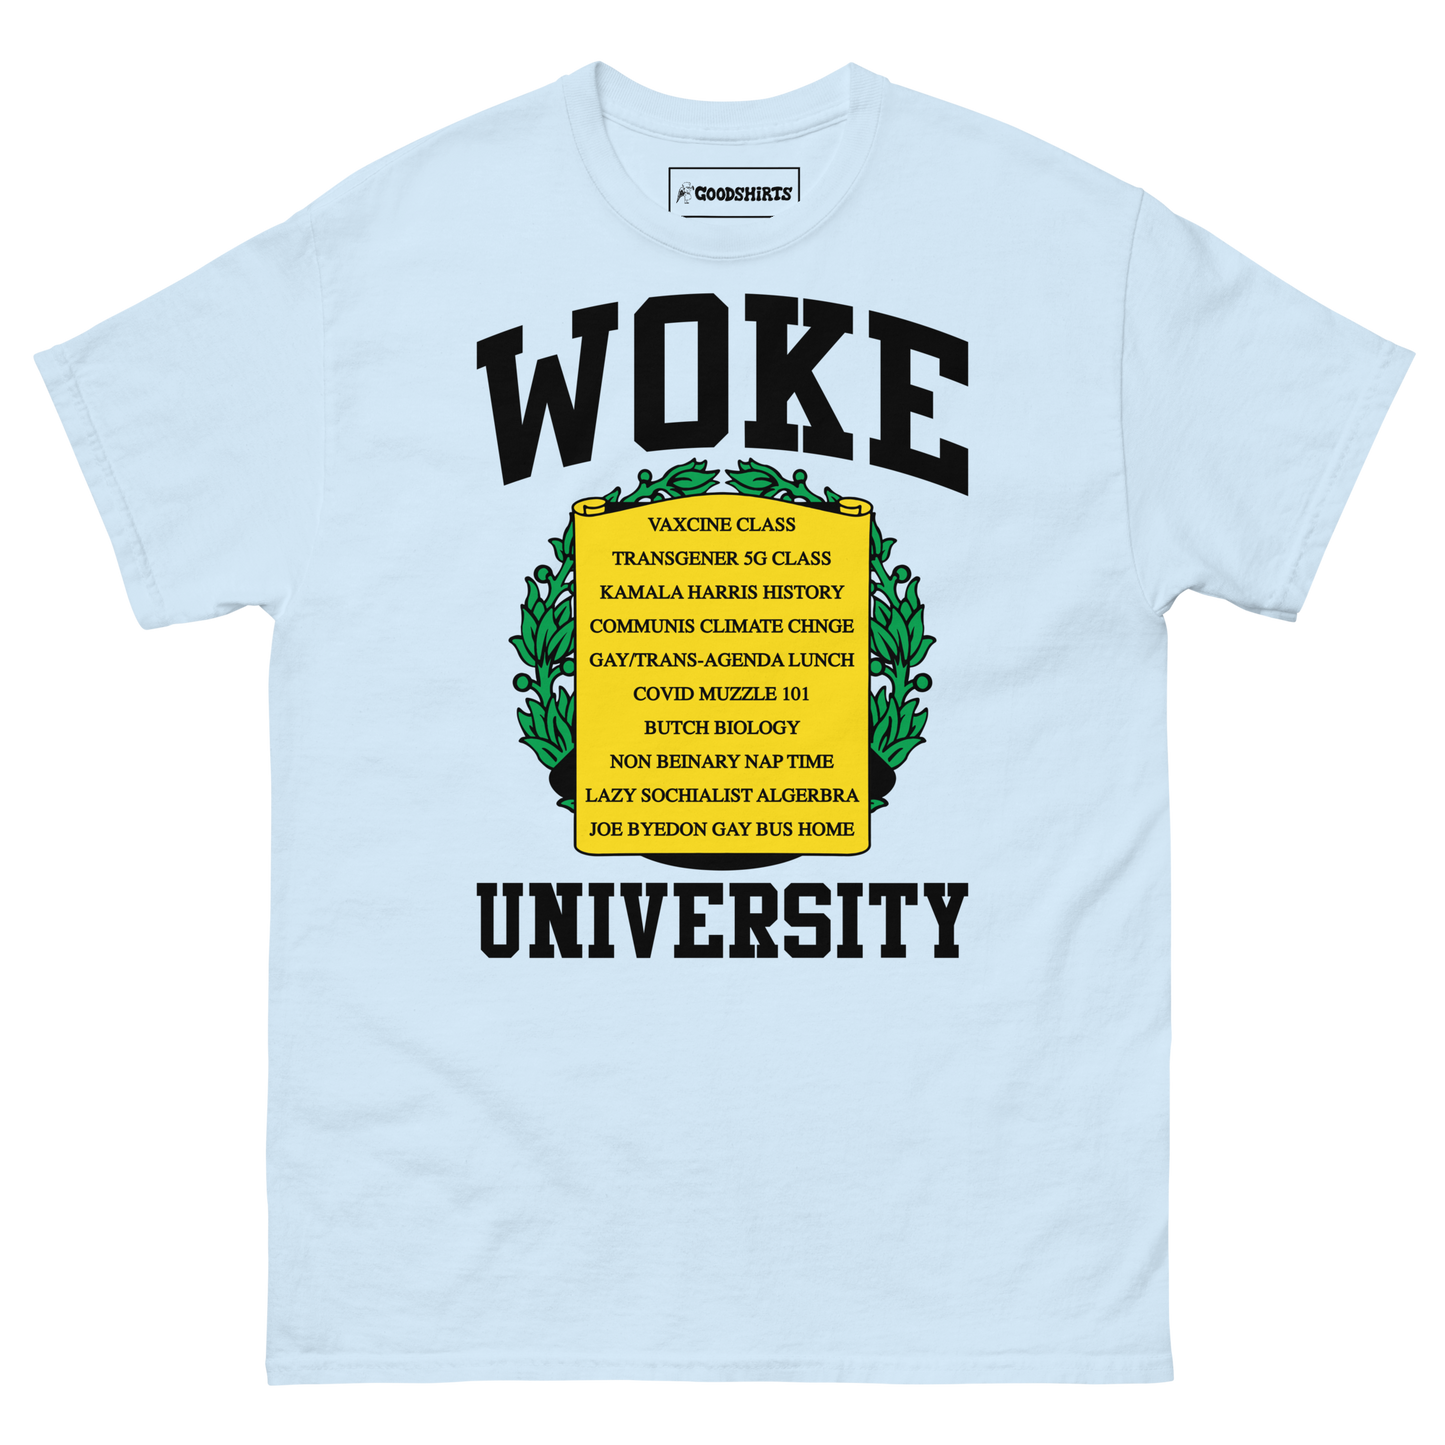 Woke University.